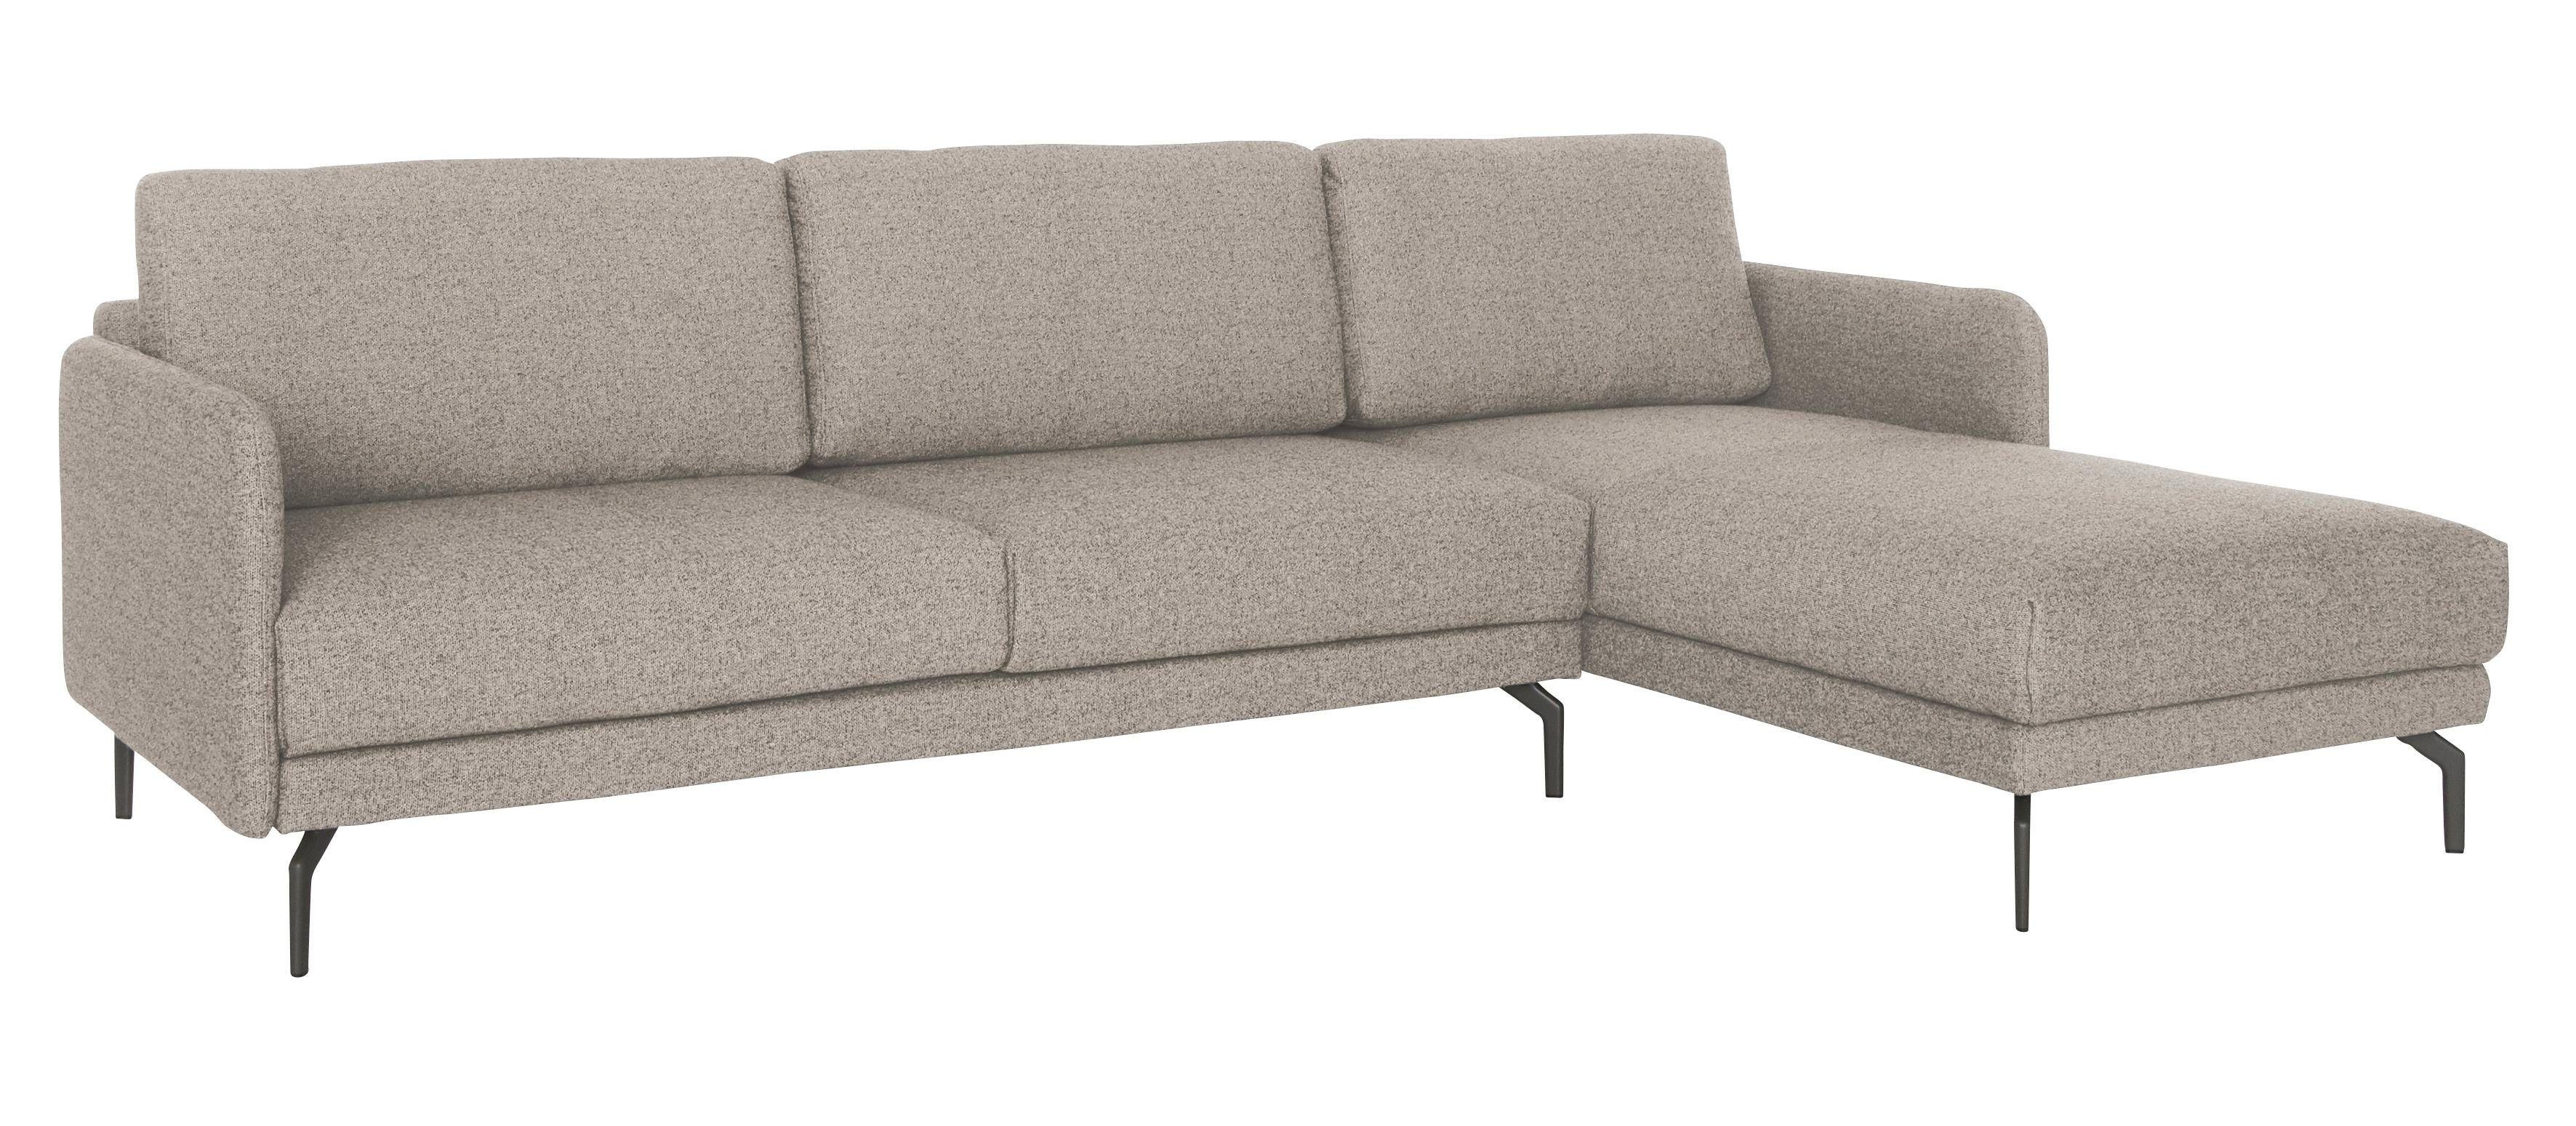 hülsta sofa Ecksofa hs.450, Breite in sehr schmal, umbragrau Armlehne 234 cm, Alugussfüße